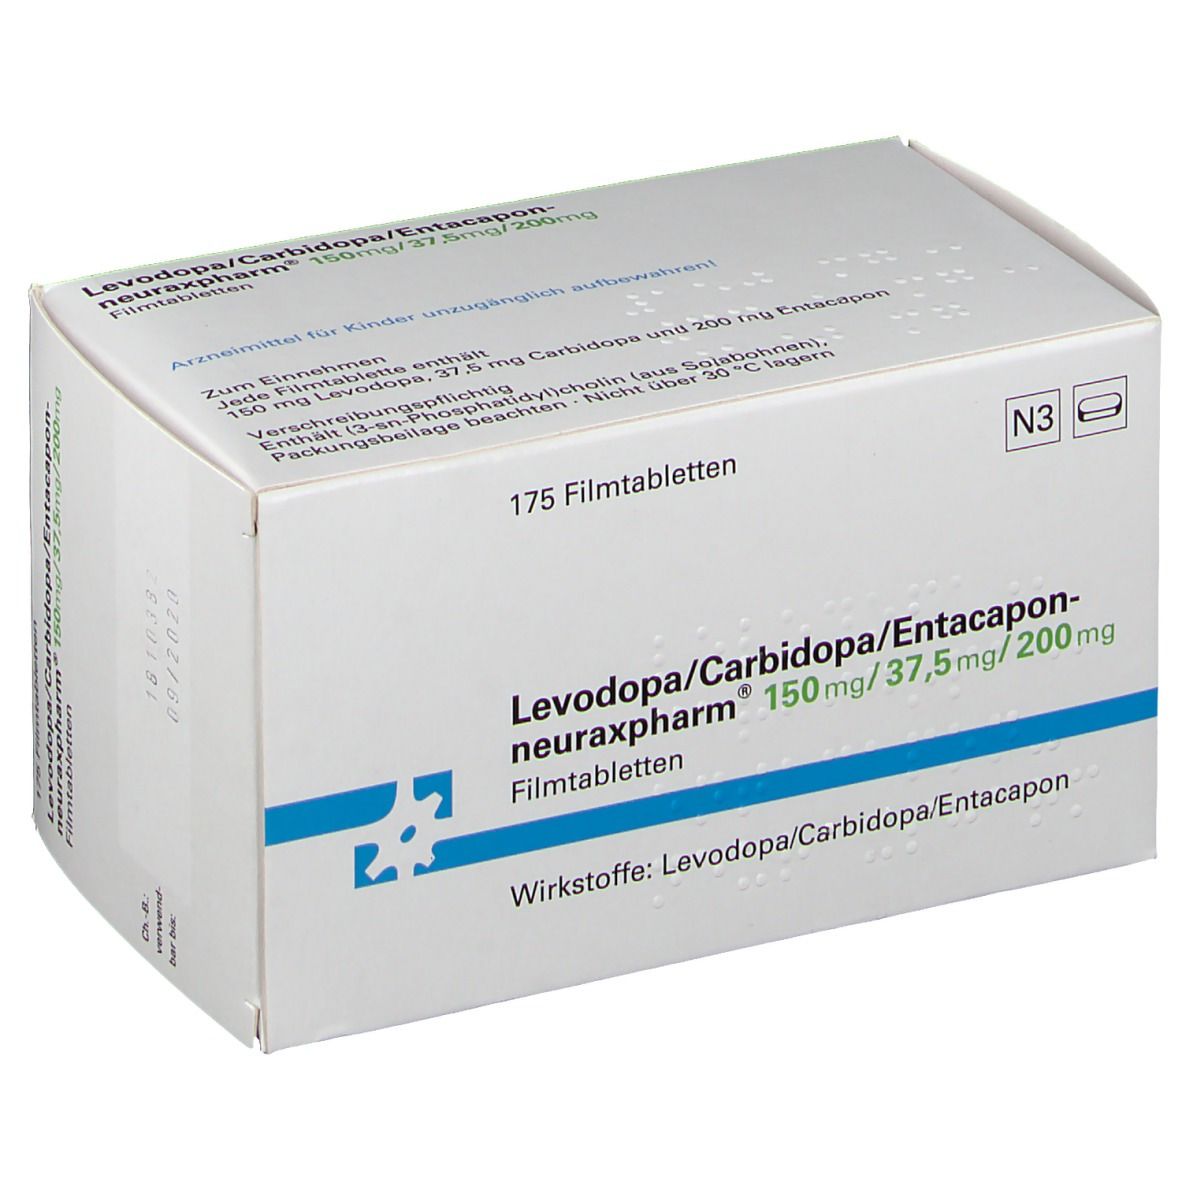 Levodopa/Carbidopa/Entacapon-neuraxpharm® 150 mg/37,5 mg/200 mg